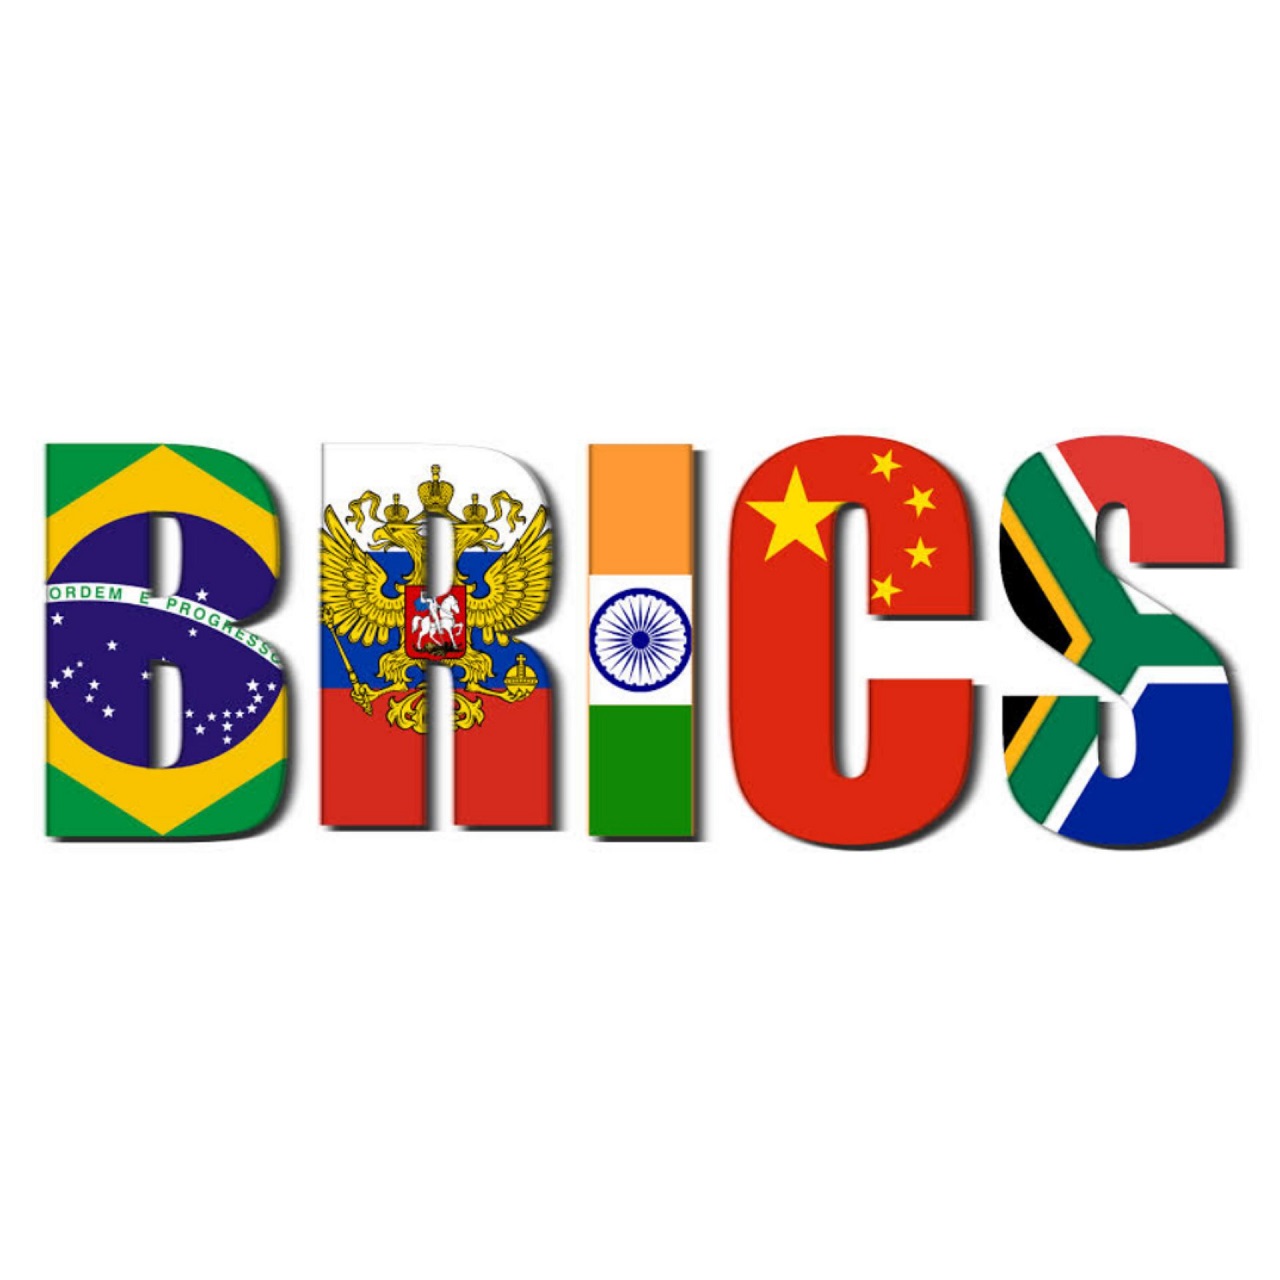 R5 ako rezervná mena BRICS